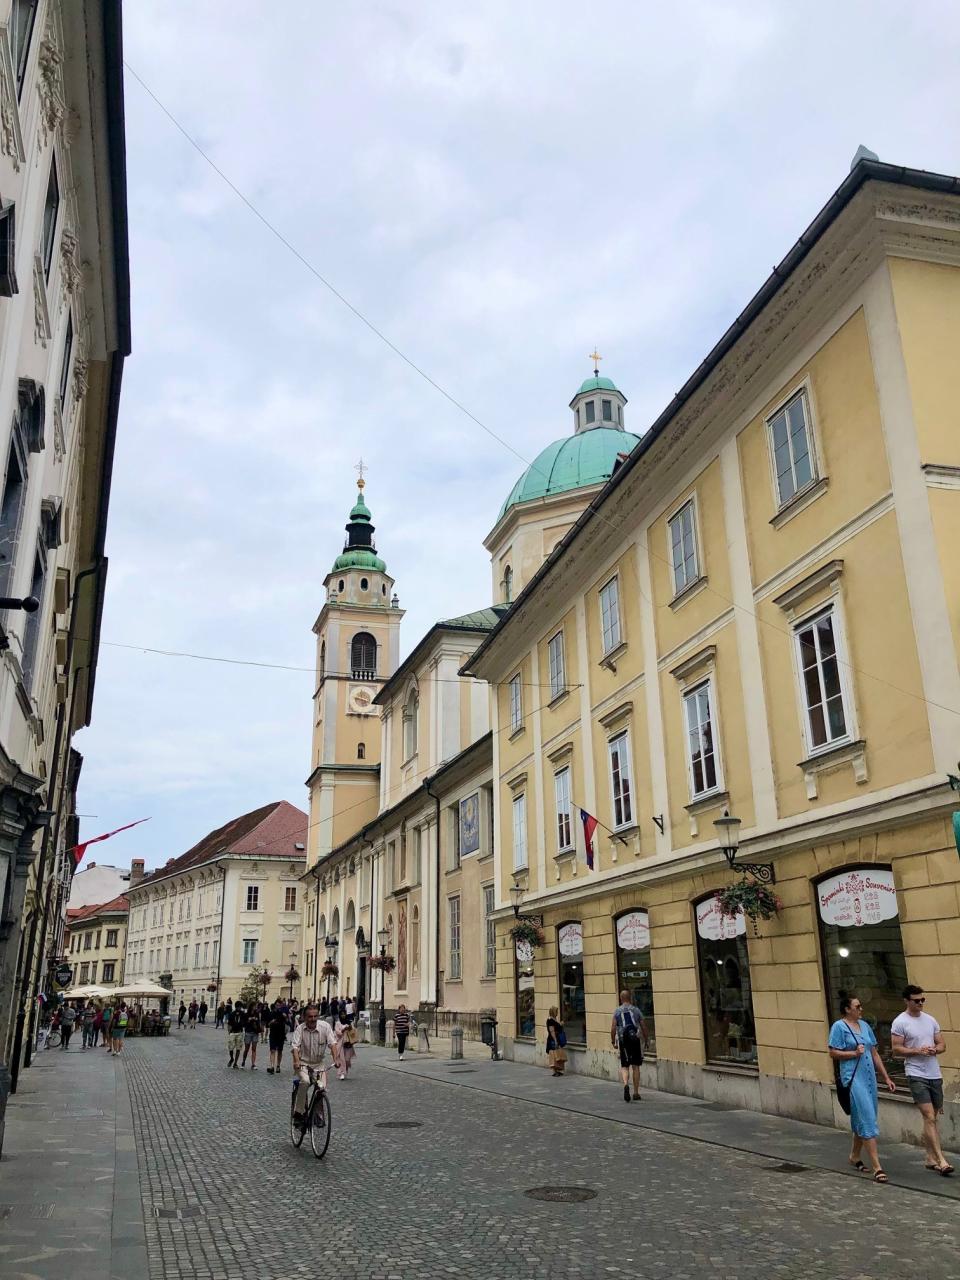 Ljubljana city streets, no cars allowed